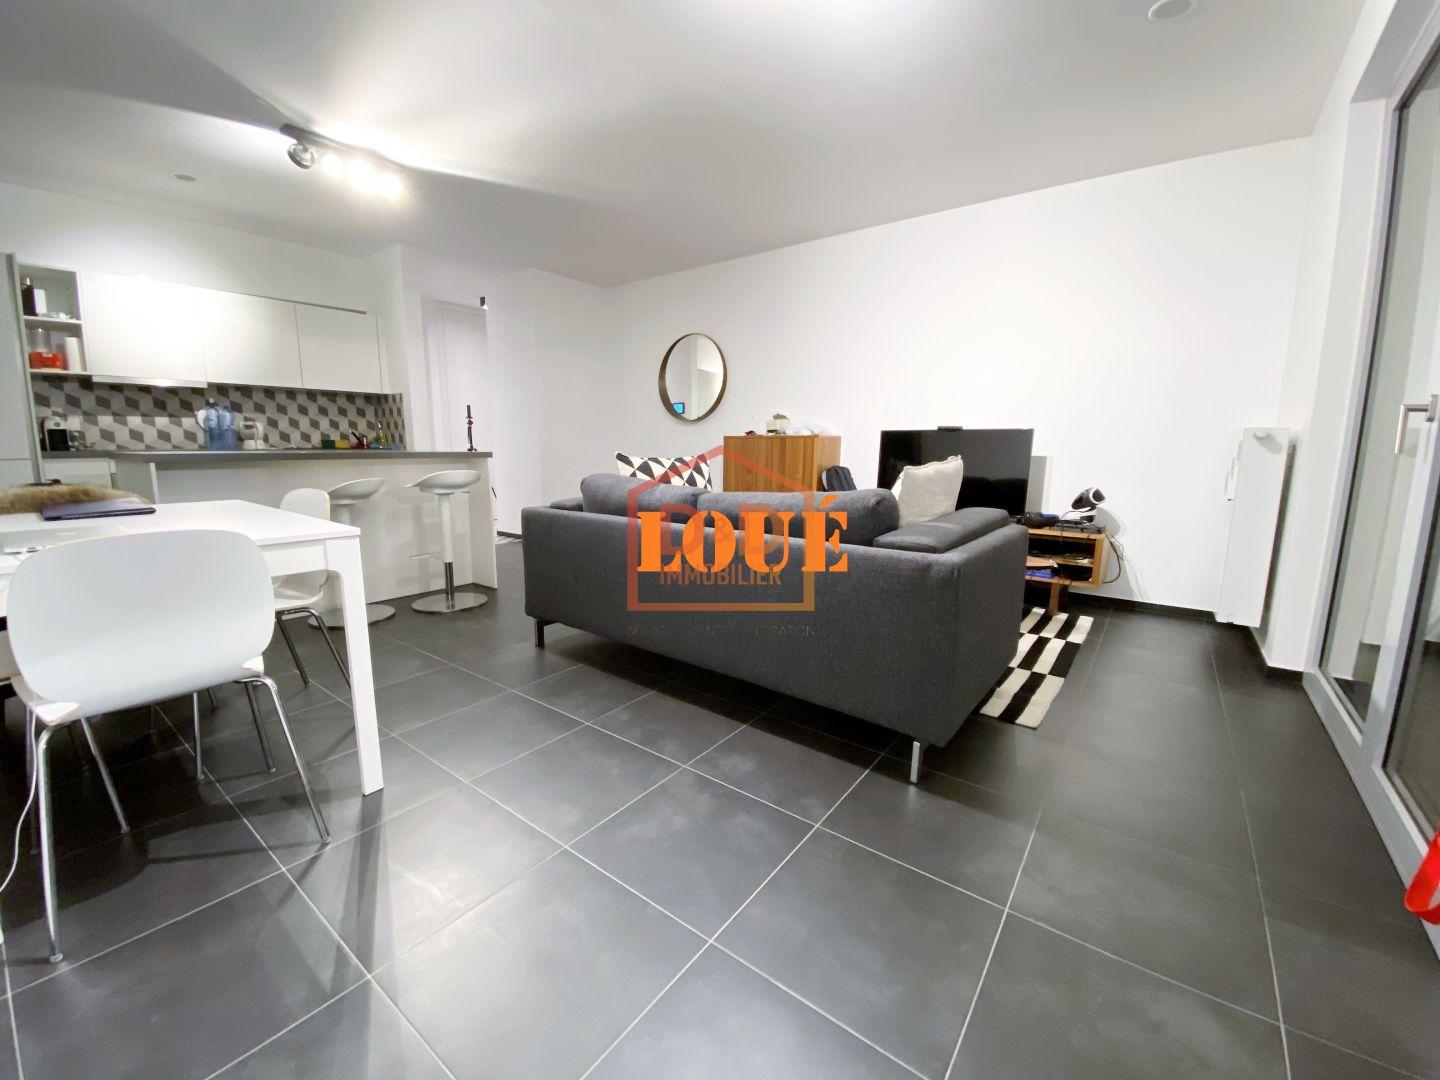 Appartement à Luxembourg-Gasperich, 52 m², 1 chambre, 1 600 €/mois